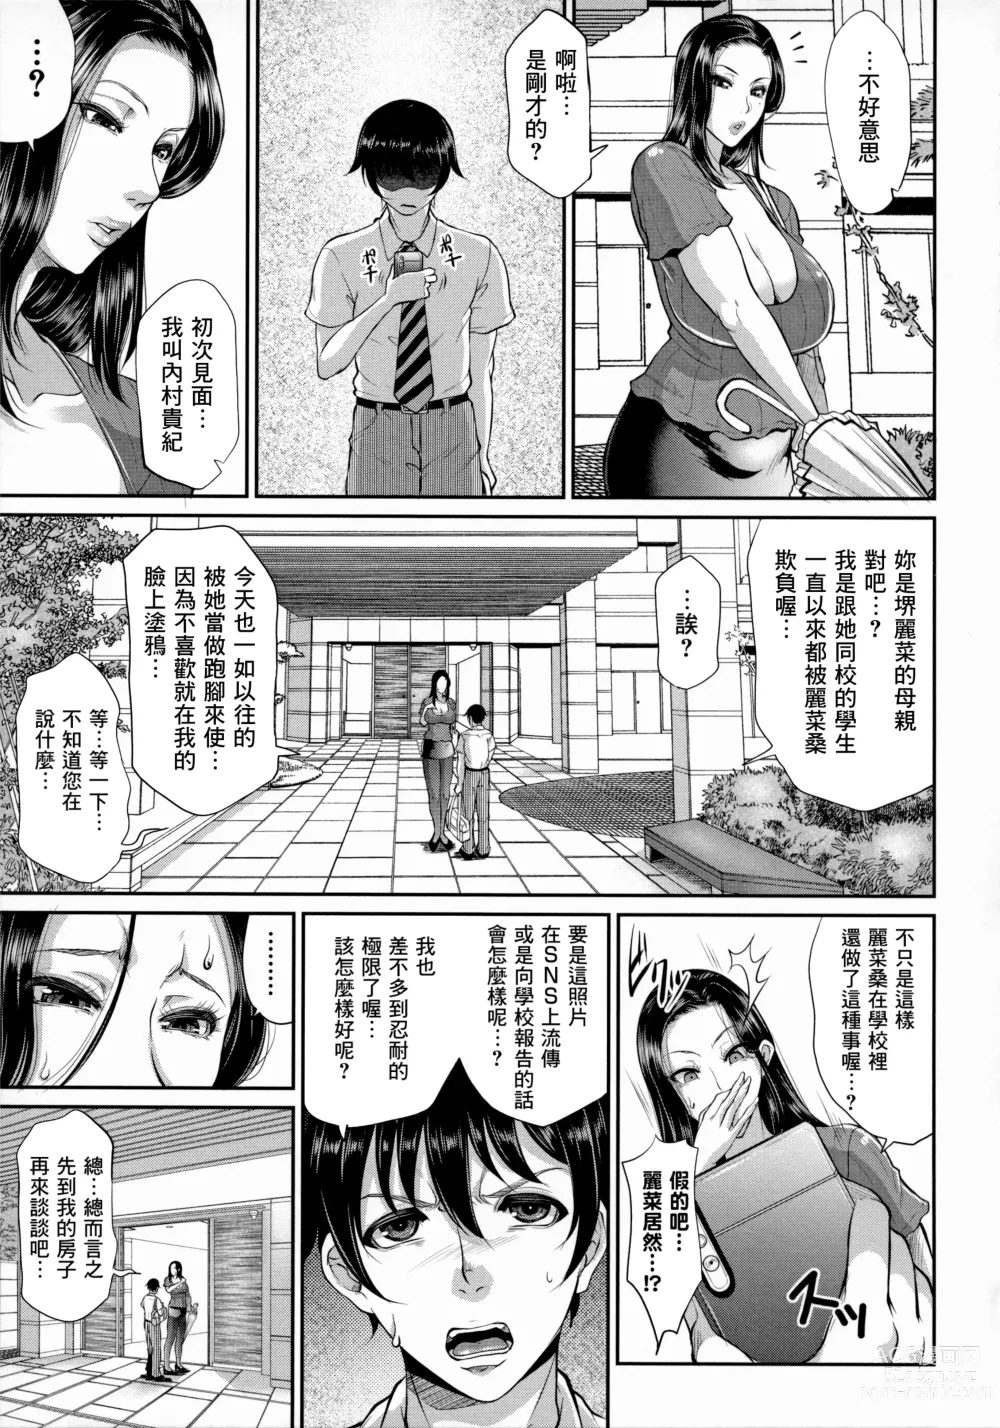 Page 7 of manga Ijimecco